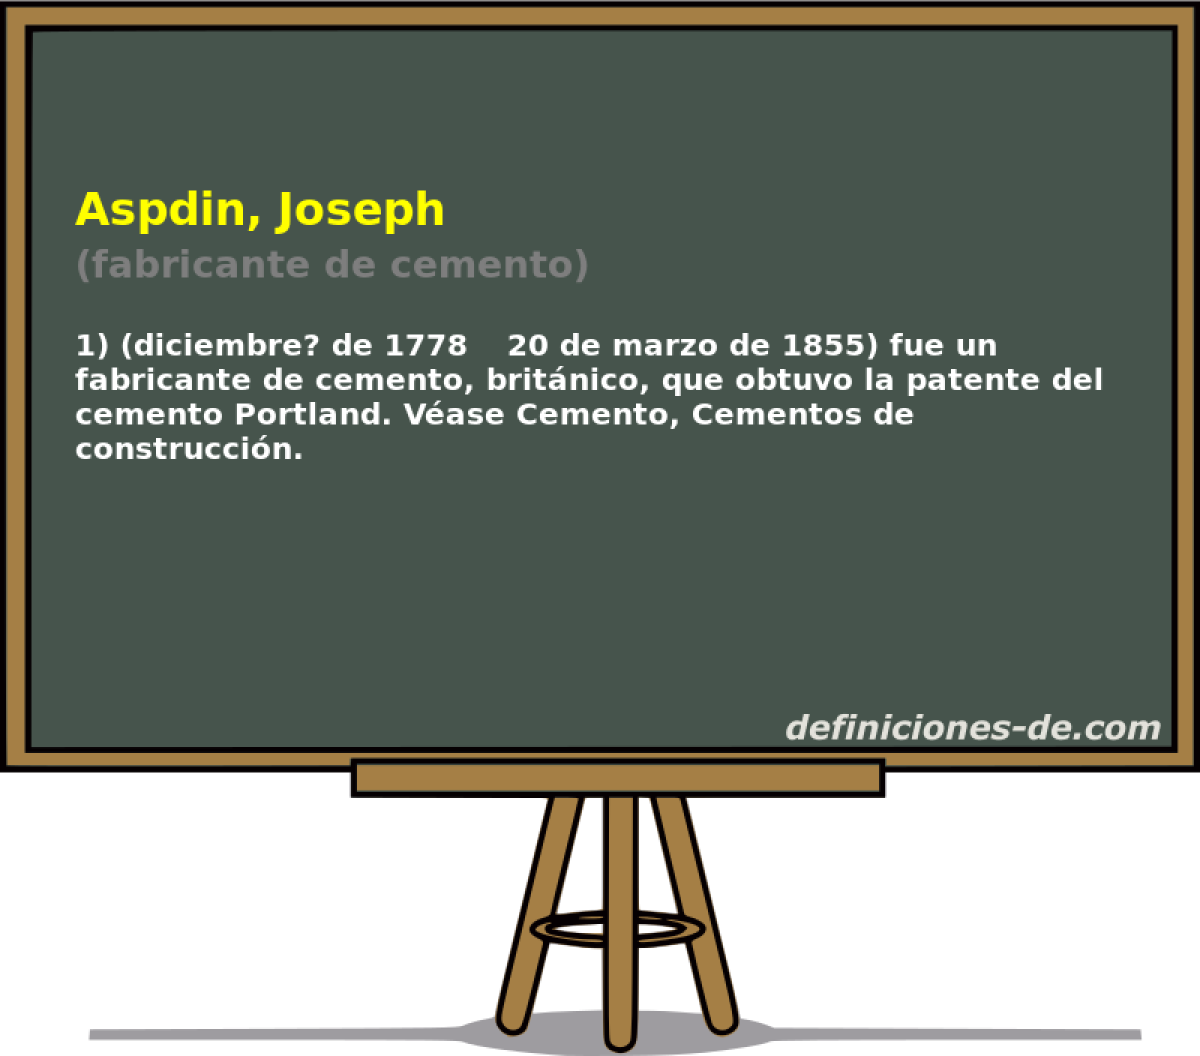 Aspdin, Joseph (fabricante de cemento)